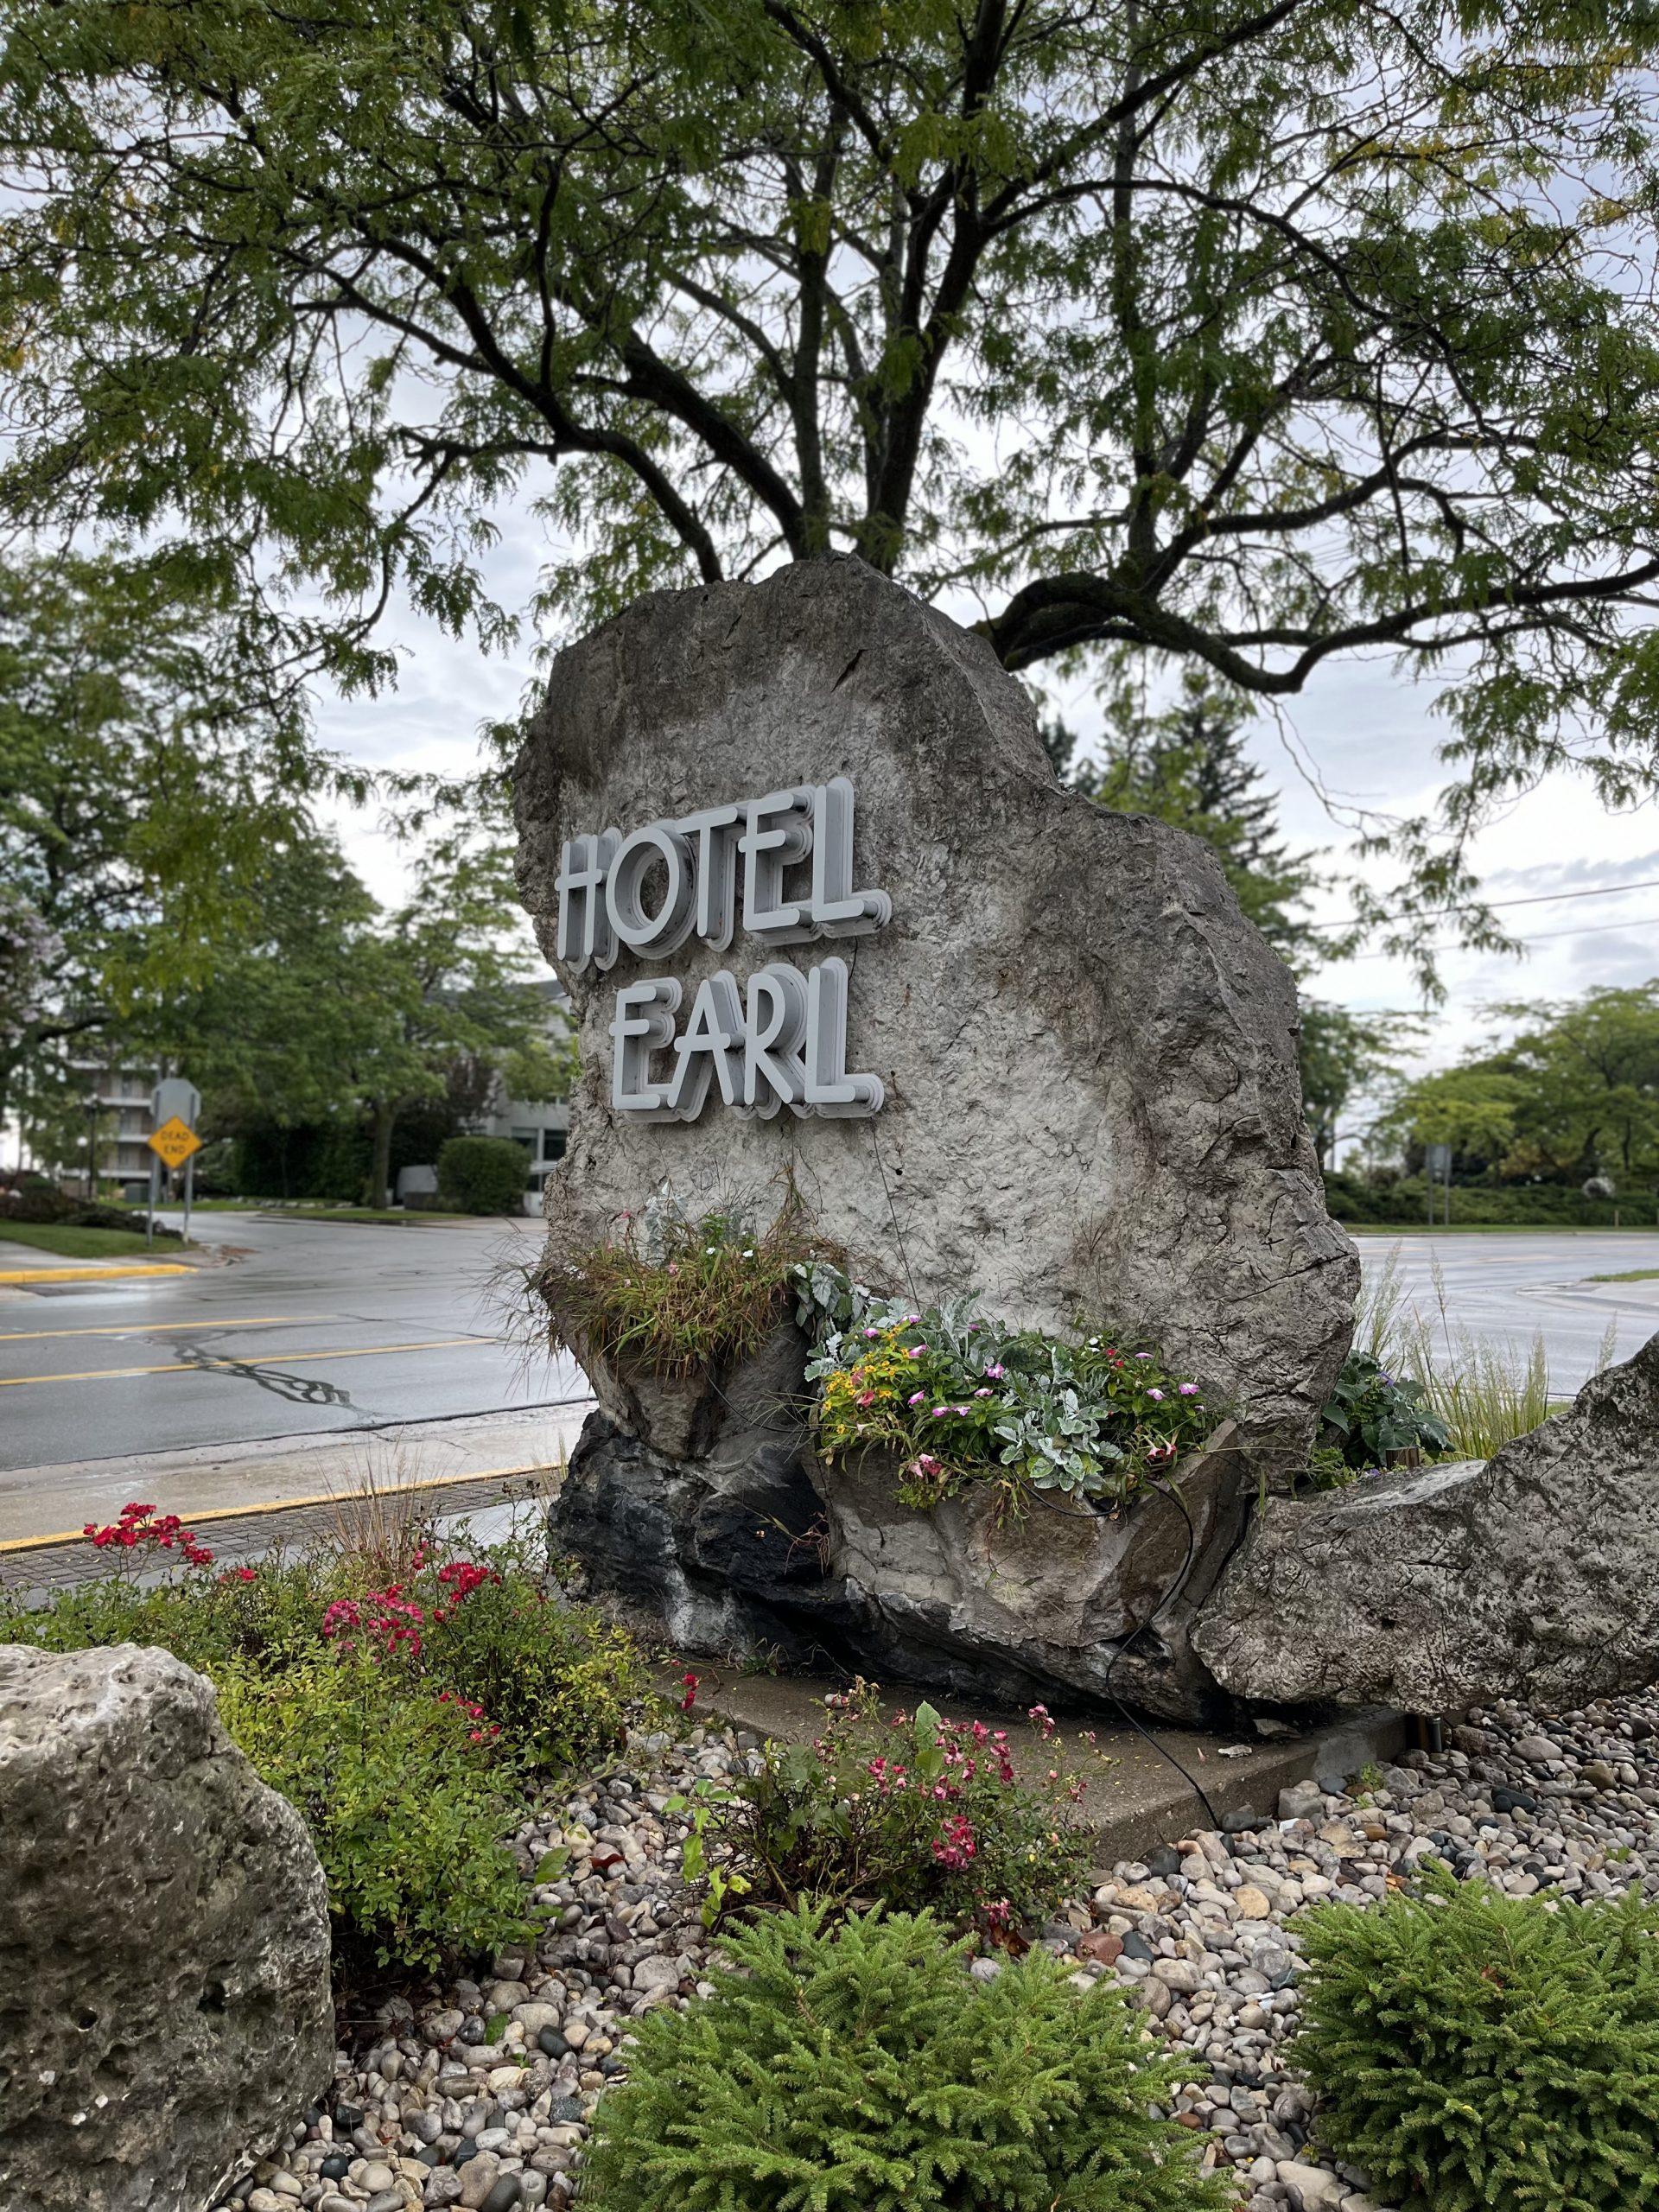 The Earl hotel, Charlevoix, Michigan